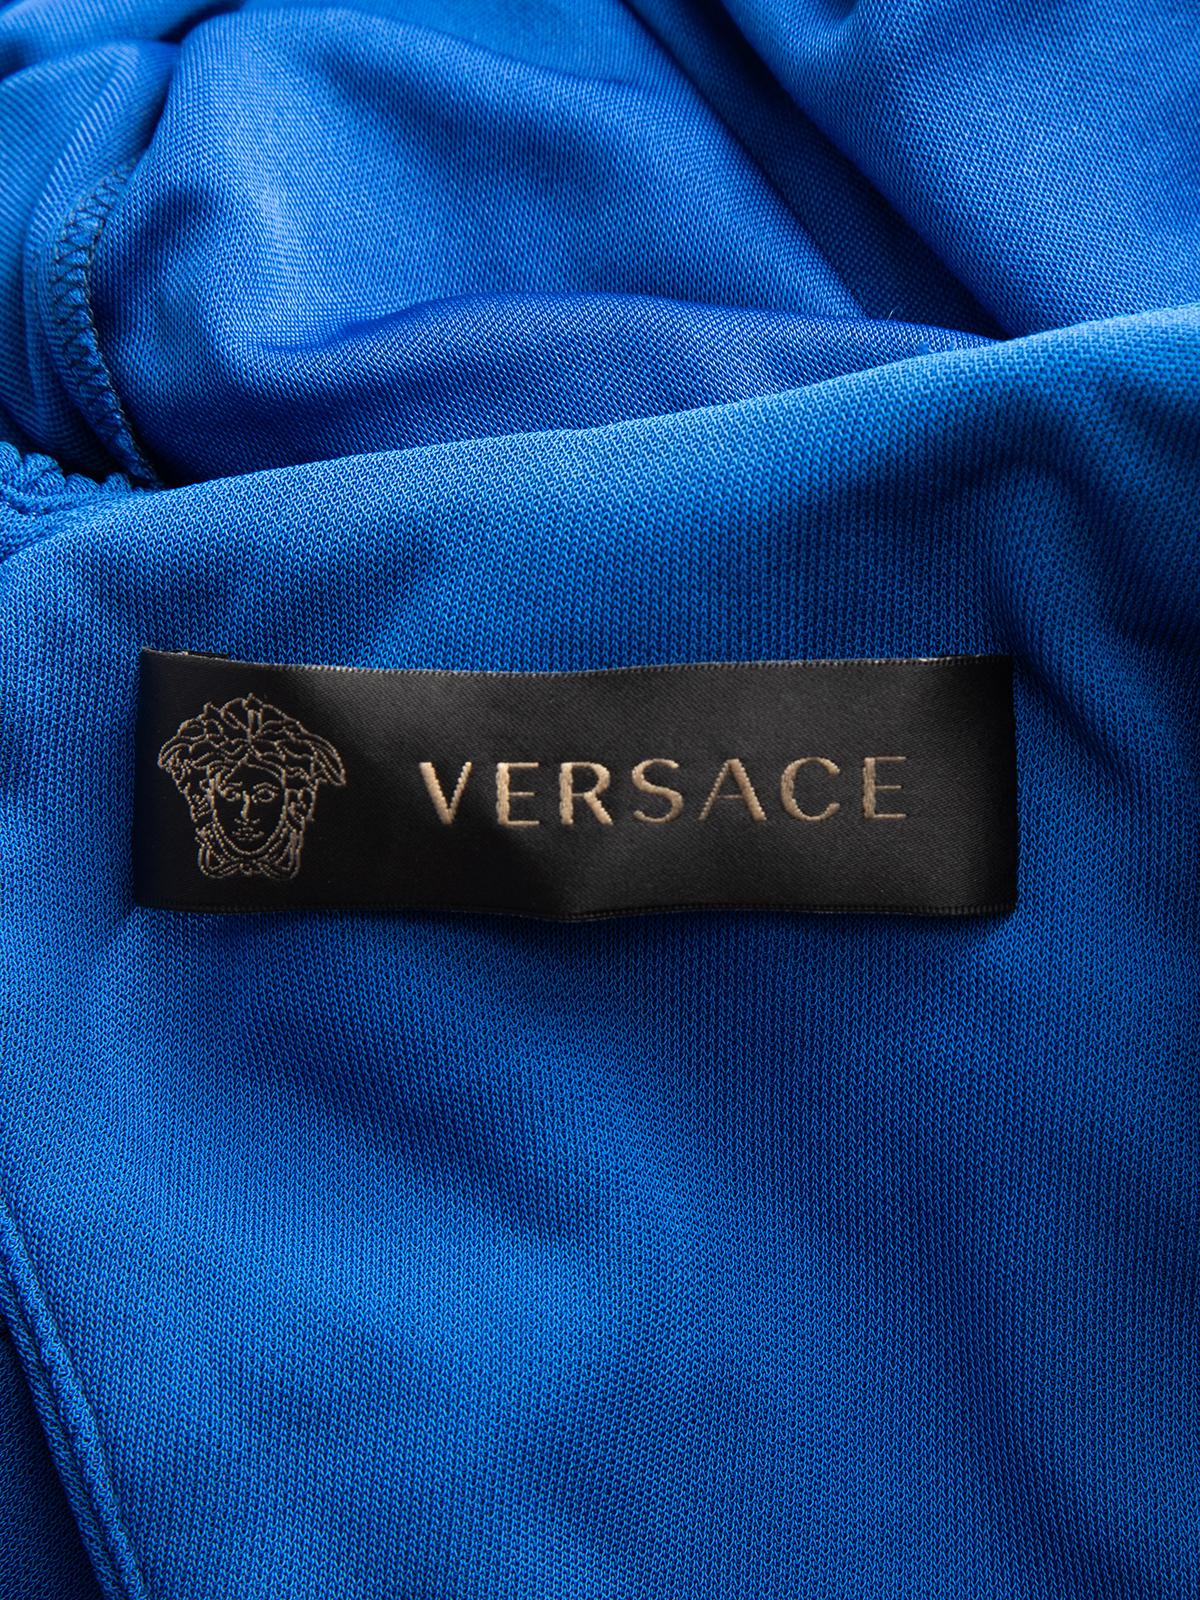 Pre-Loved Versace Women''s Ärmelloses Kleid in Knielänge im Angebot 1